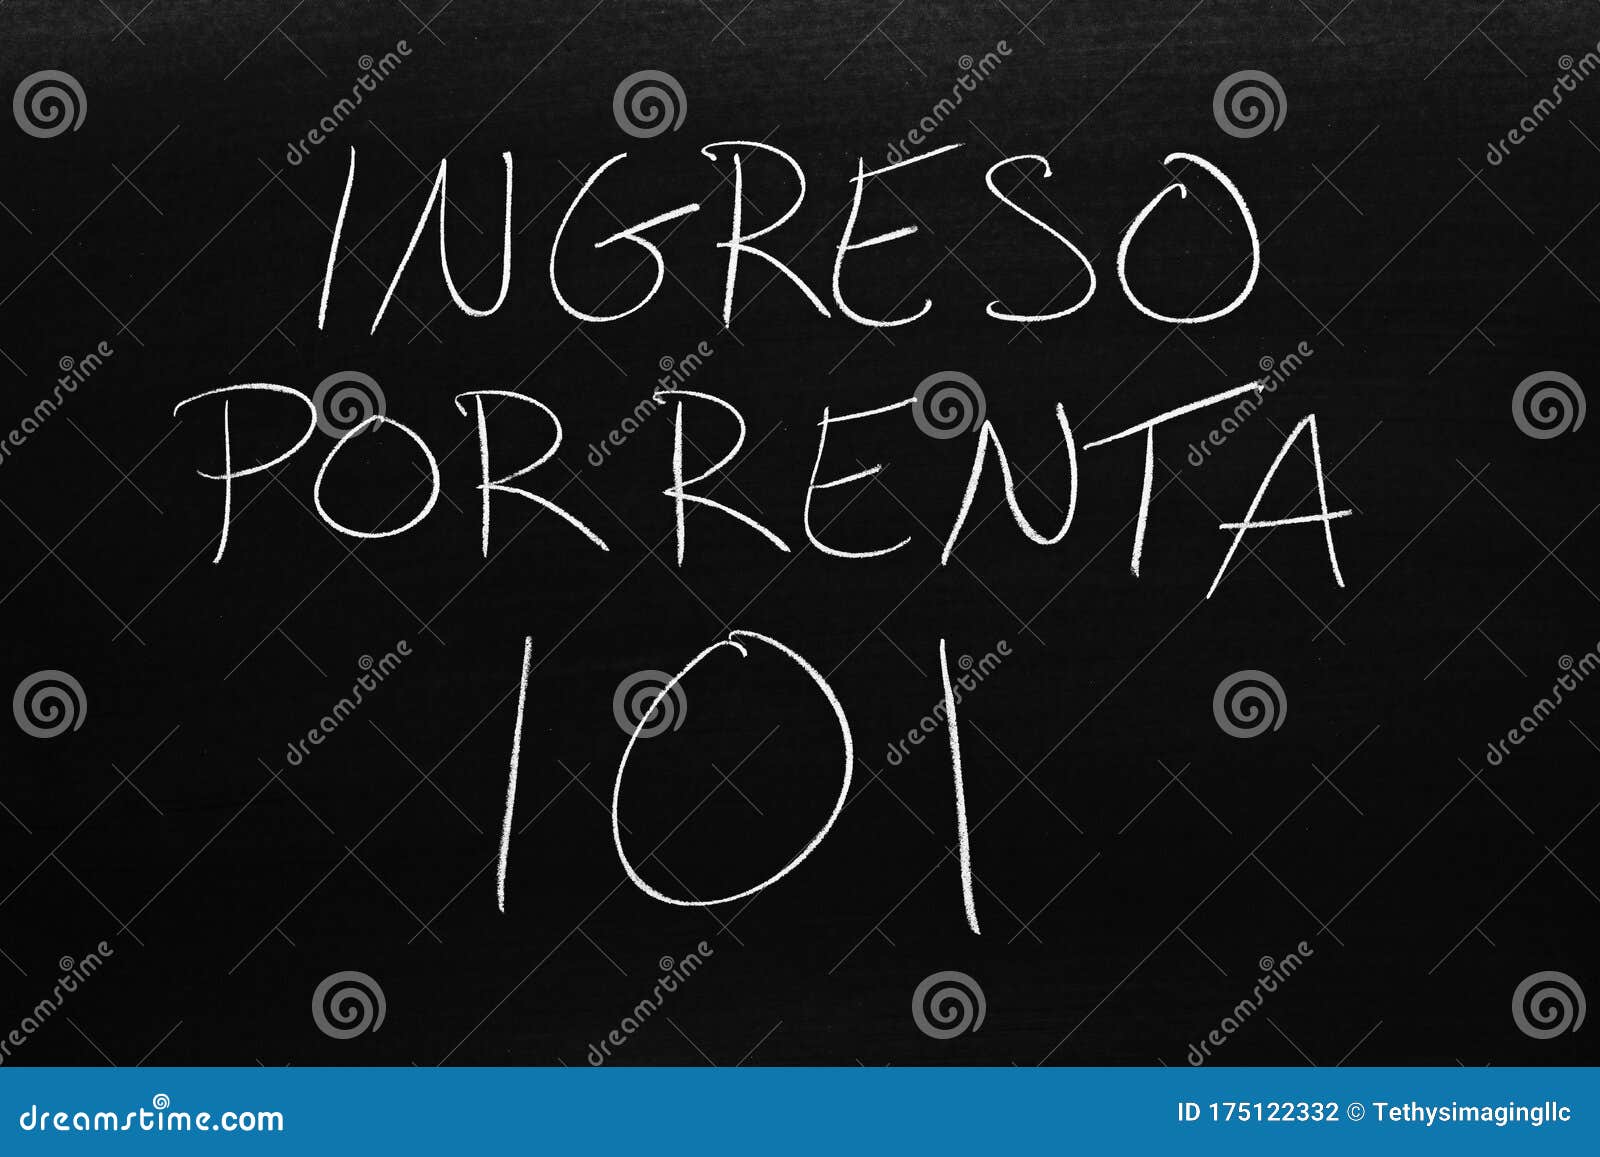 ingreso por renta 101 on a blackboard.  translation: rental income 101